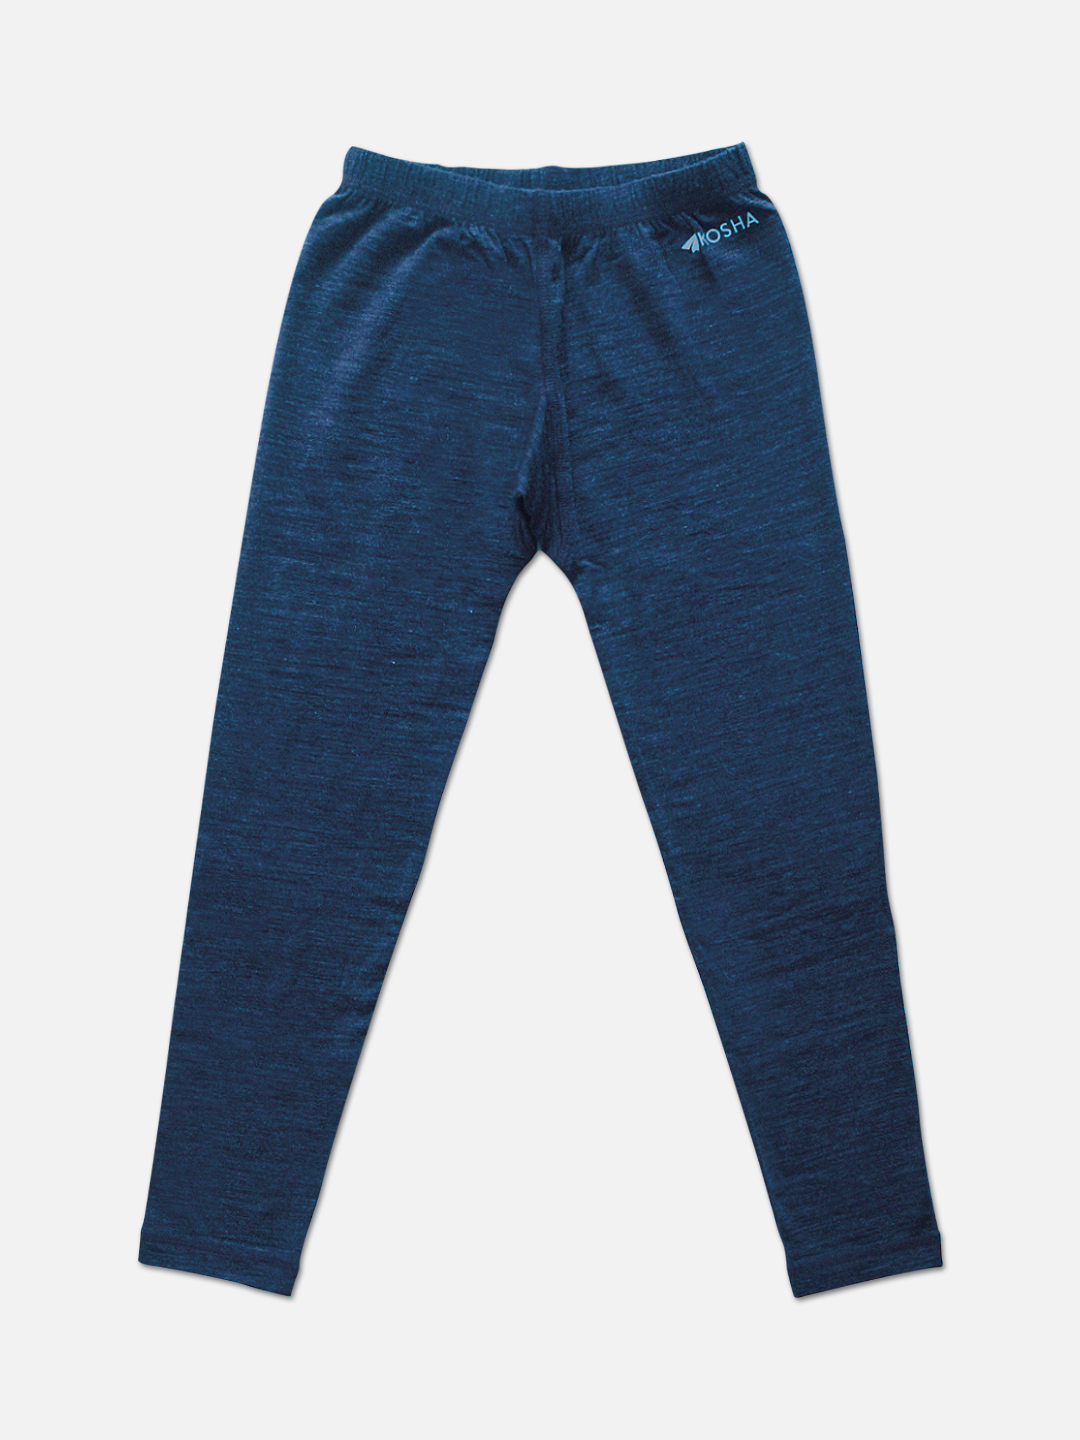 Thermals Pants for Boys  Buy Kids Fleece Pants Online - Kosha